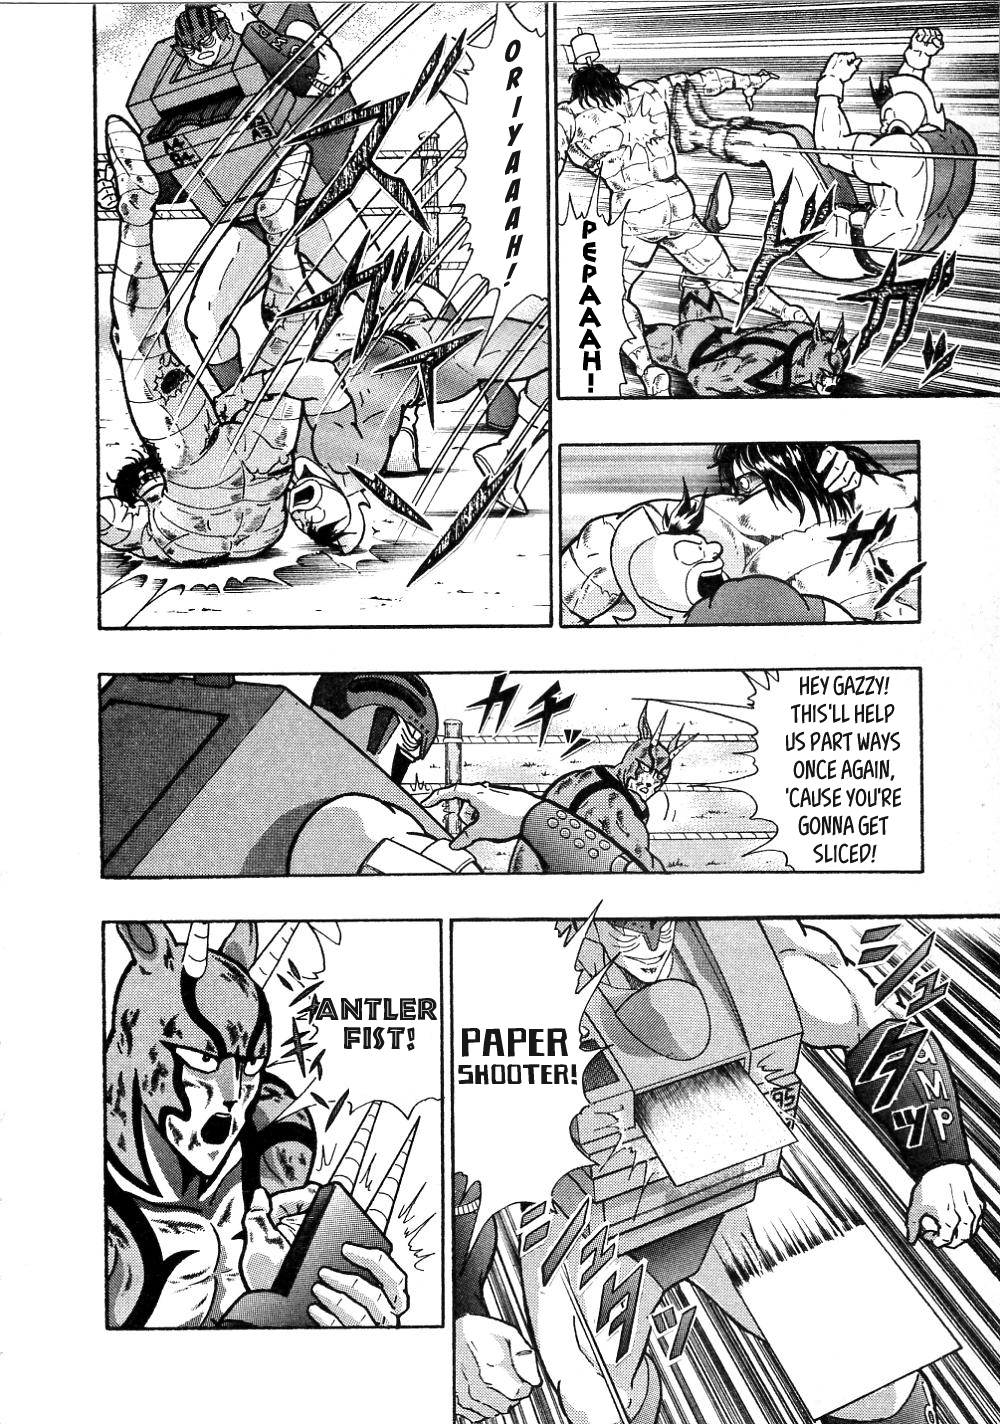 Kinnikuman II Sei: All Choujin Daishingeki Vol. 1 Ch. 6 Part With the Past! Slice the Fax!